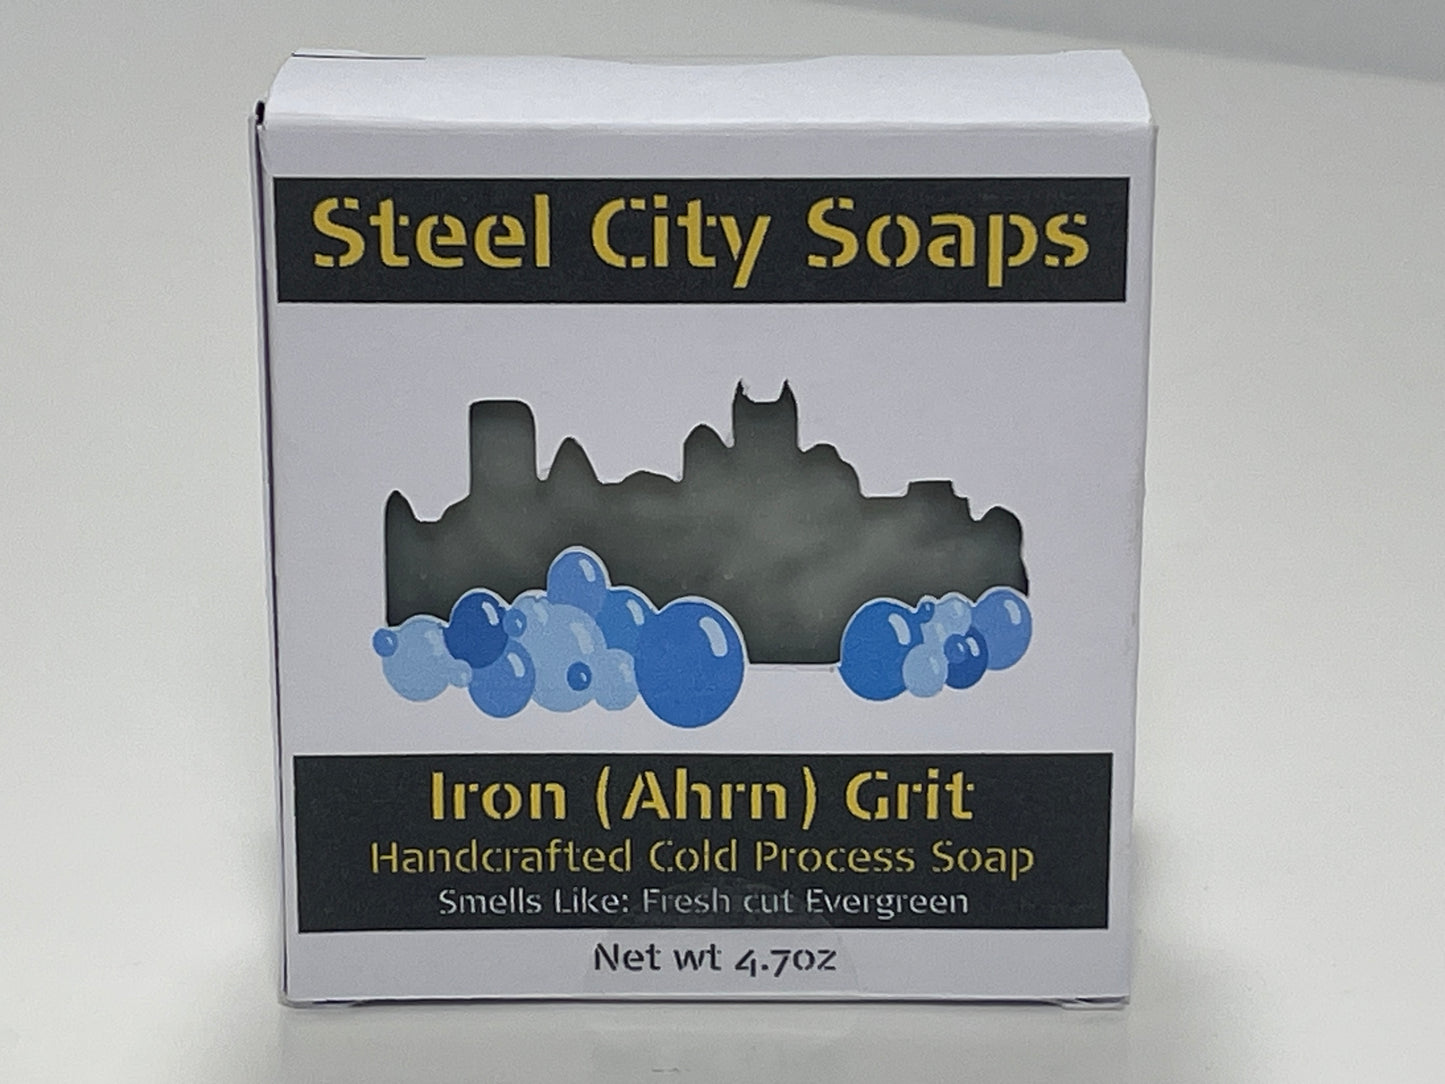 Iron (Ahrn) Grit